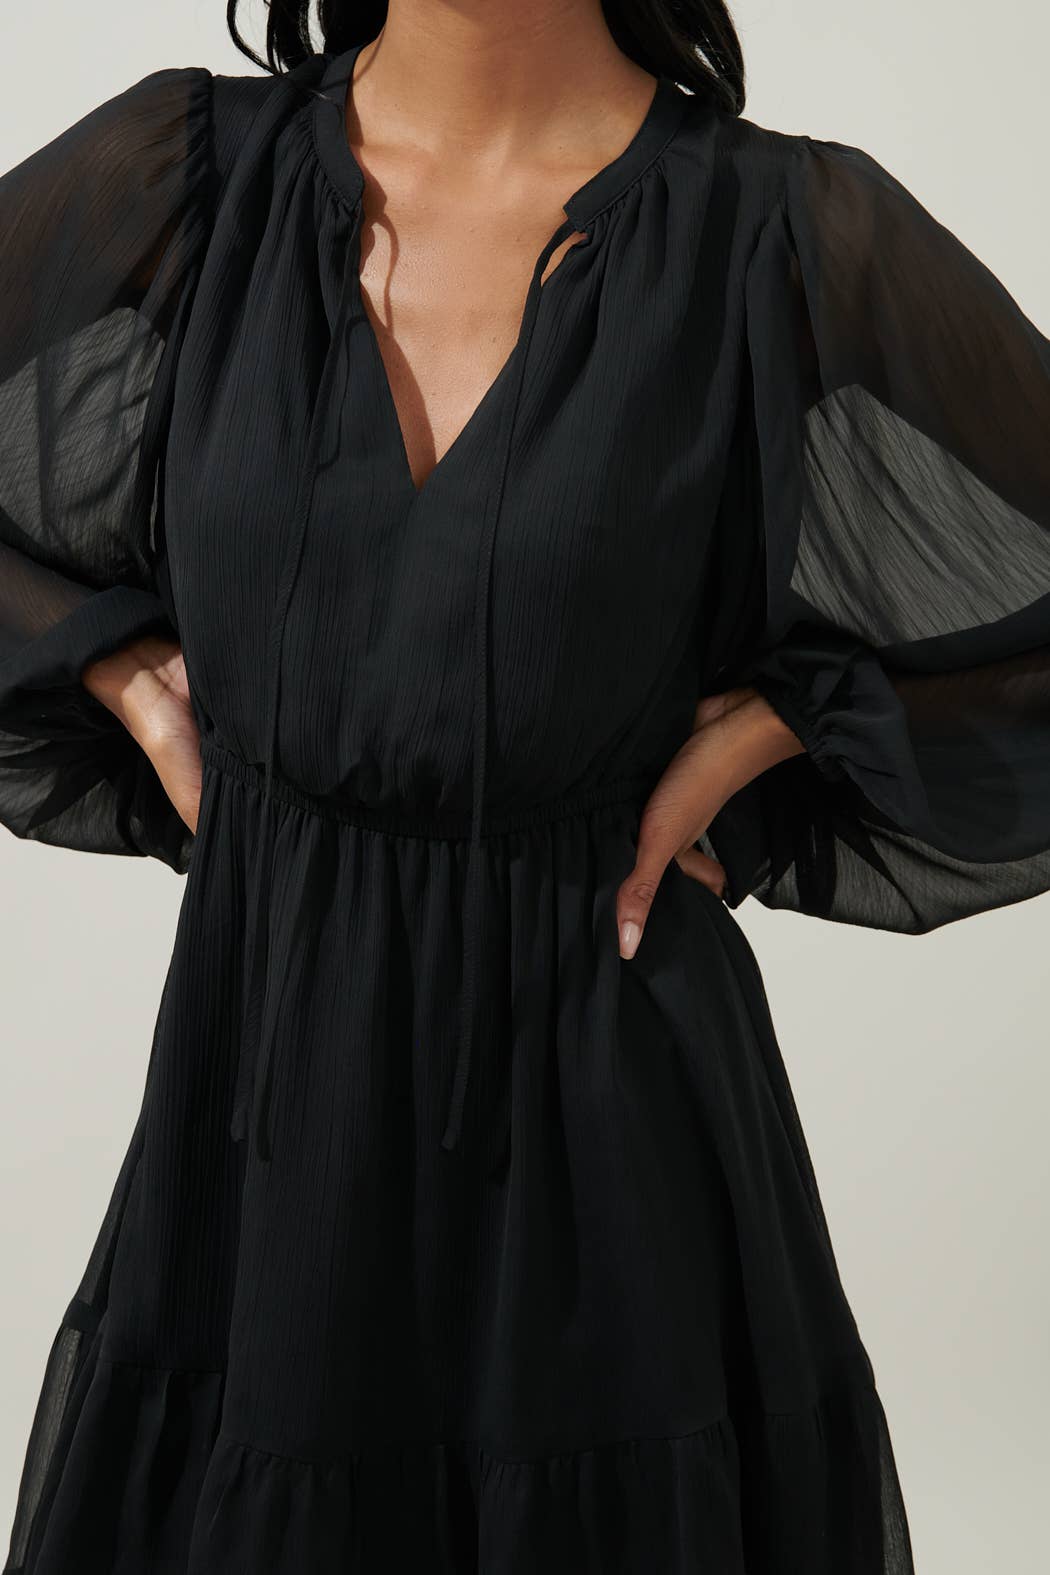 Sugarlips - Paxton Balloon Sleeve Mini Dress: Black